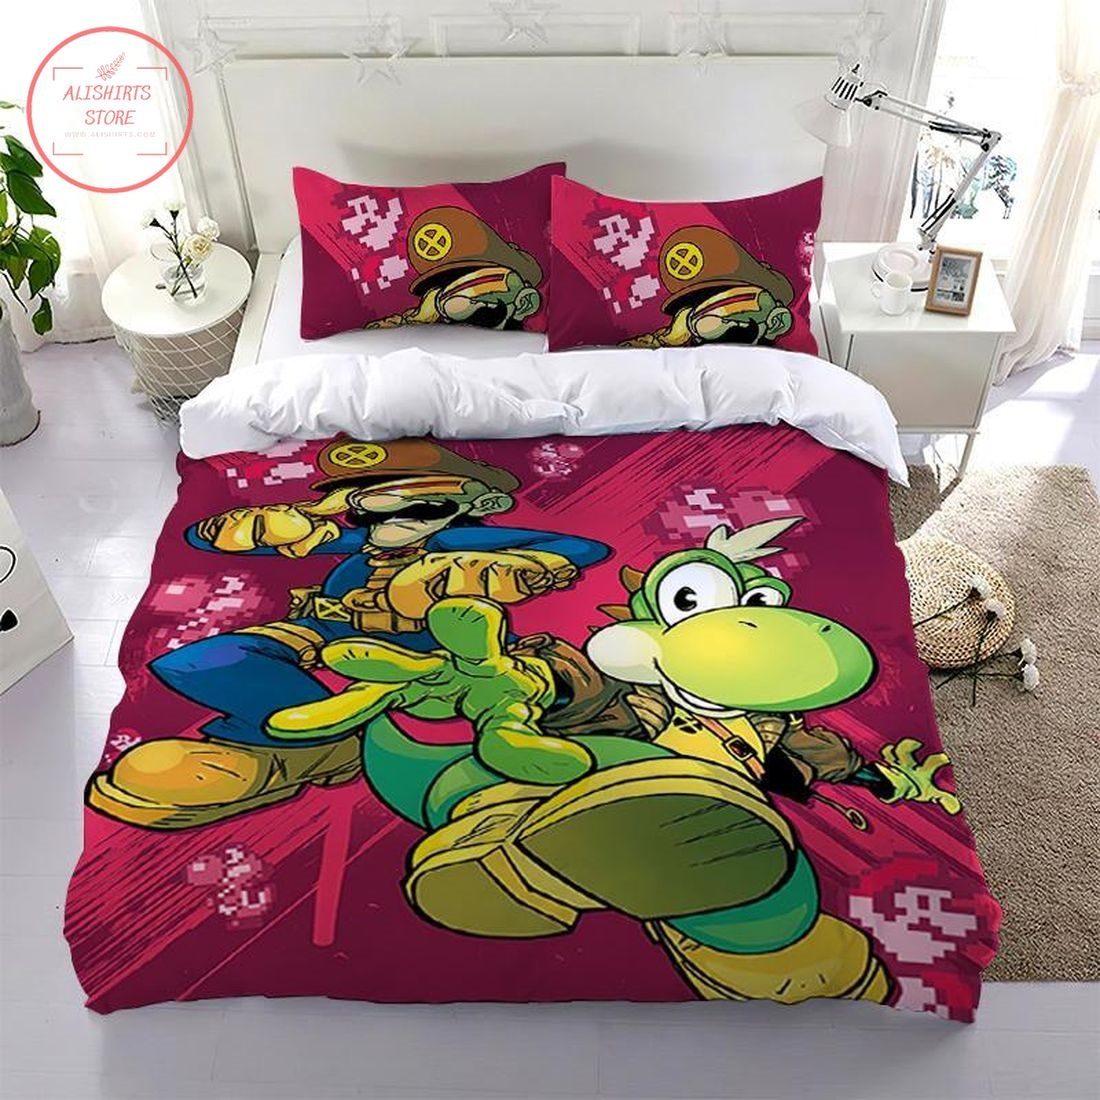 Super Mario Animated Character Bedding Set